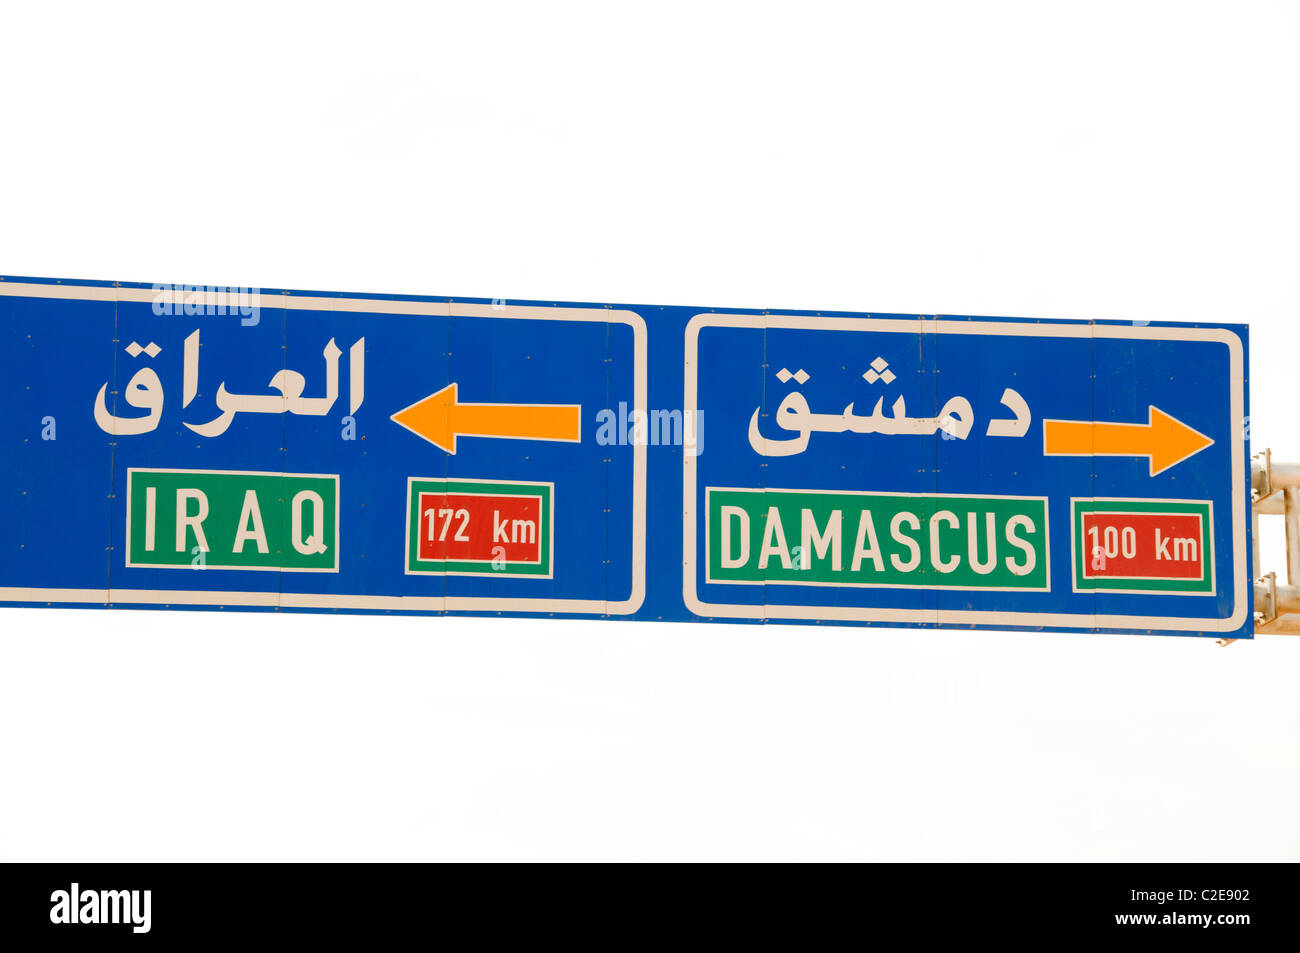 Damascus Iraq Syria Syrian Road traffic Sign Stock Photo